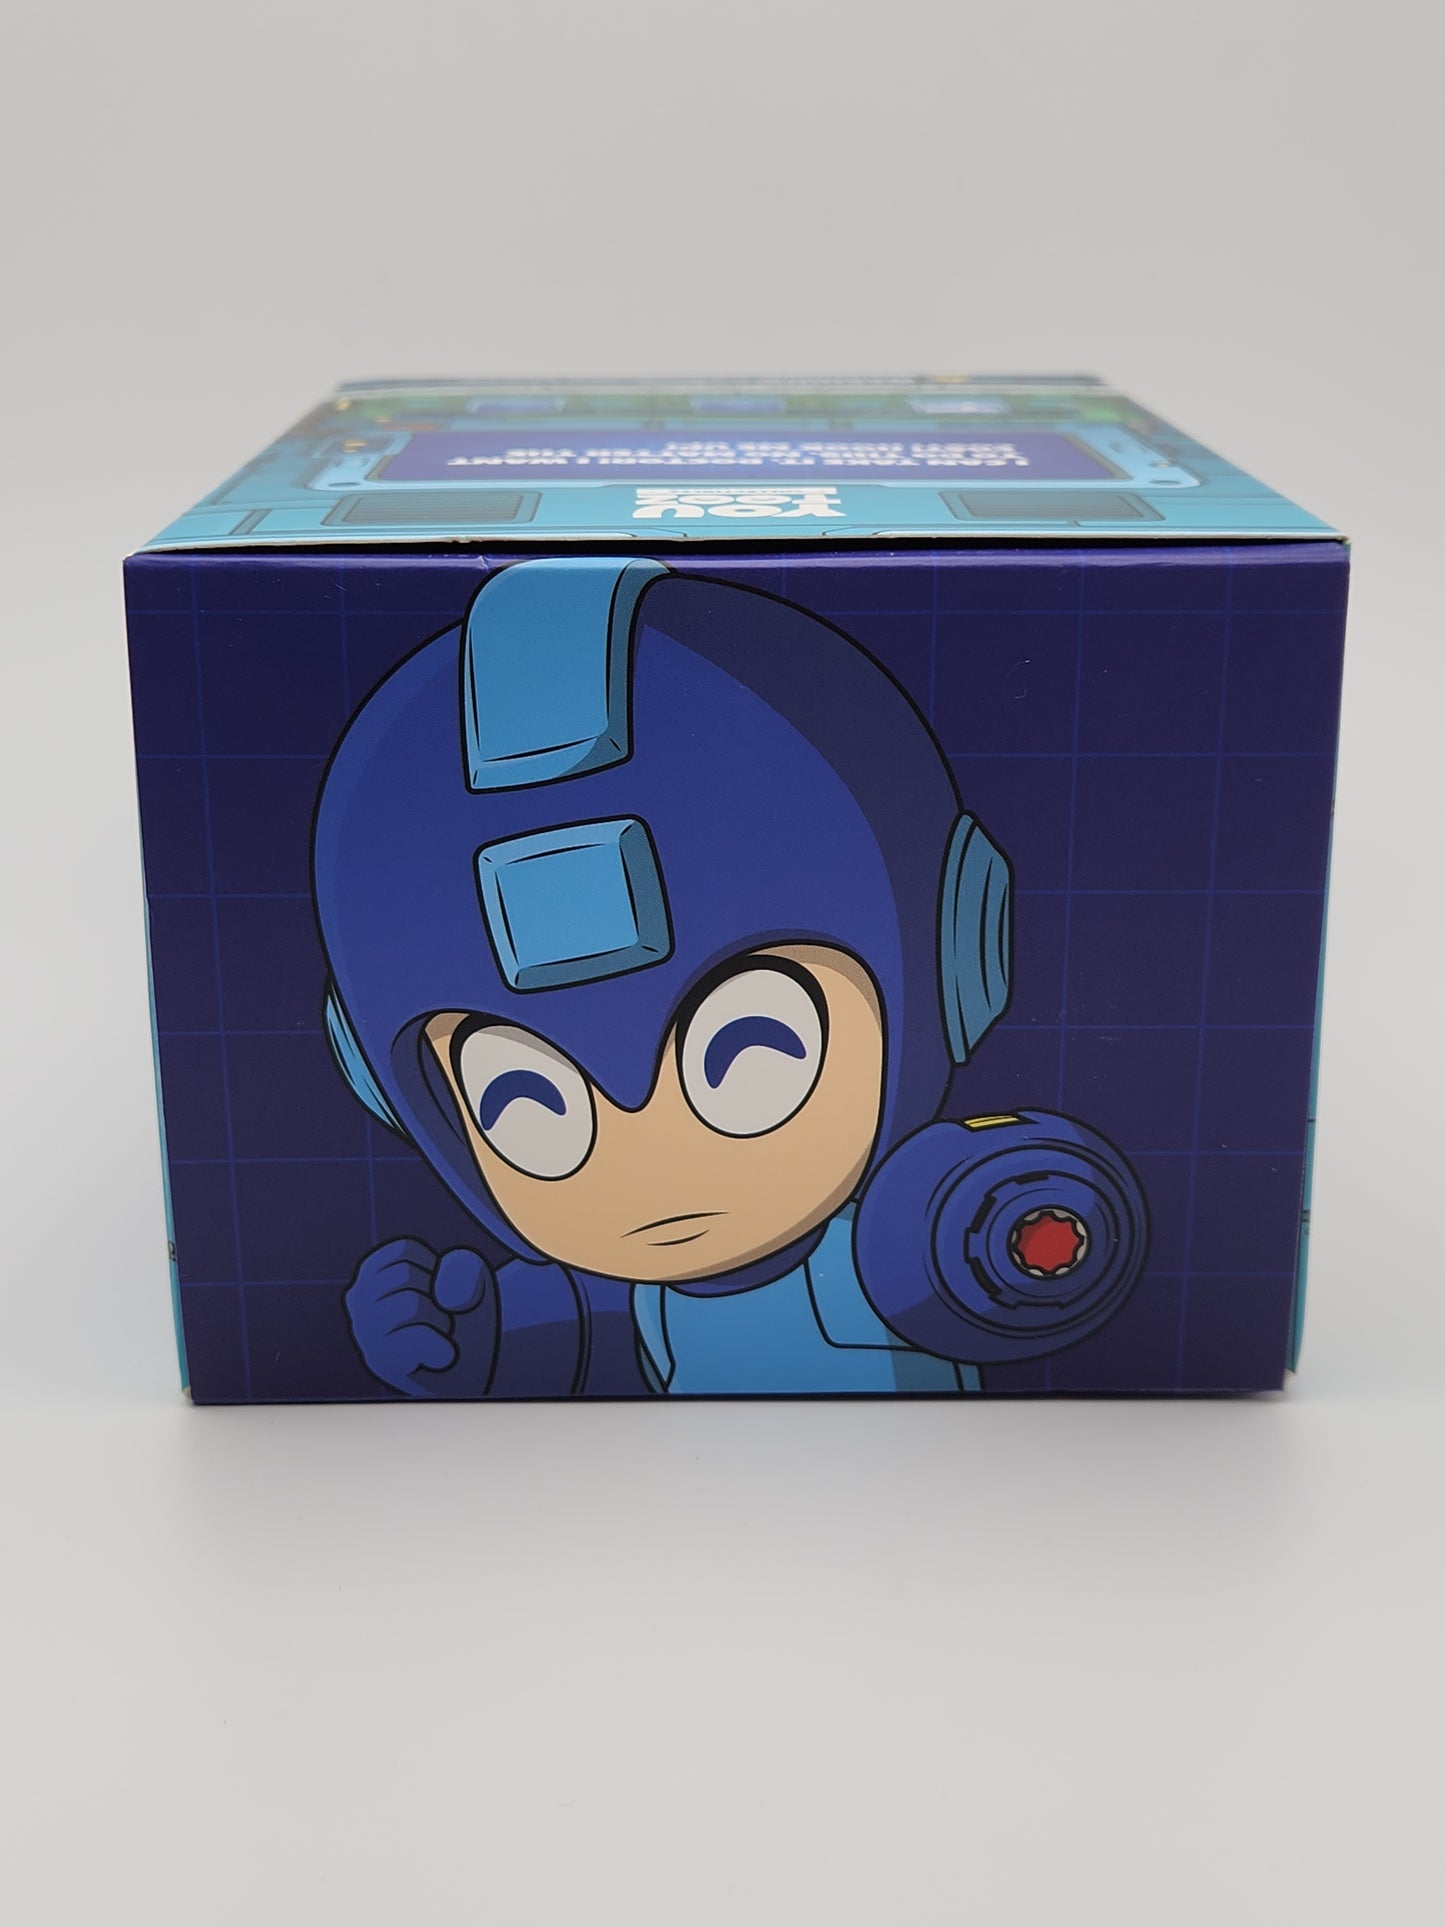 YouTooz- Mega Man 11 Collection: Mega Man